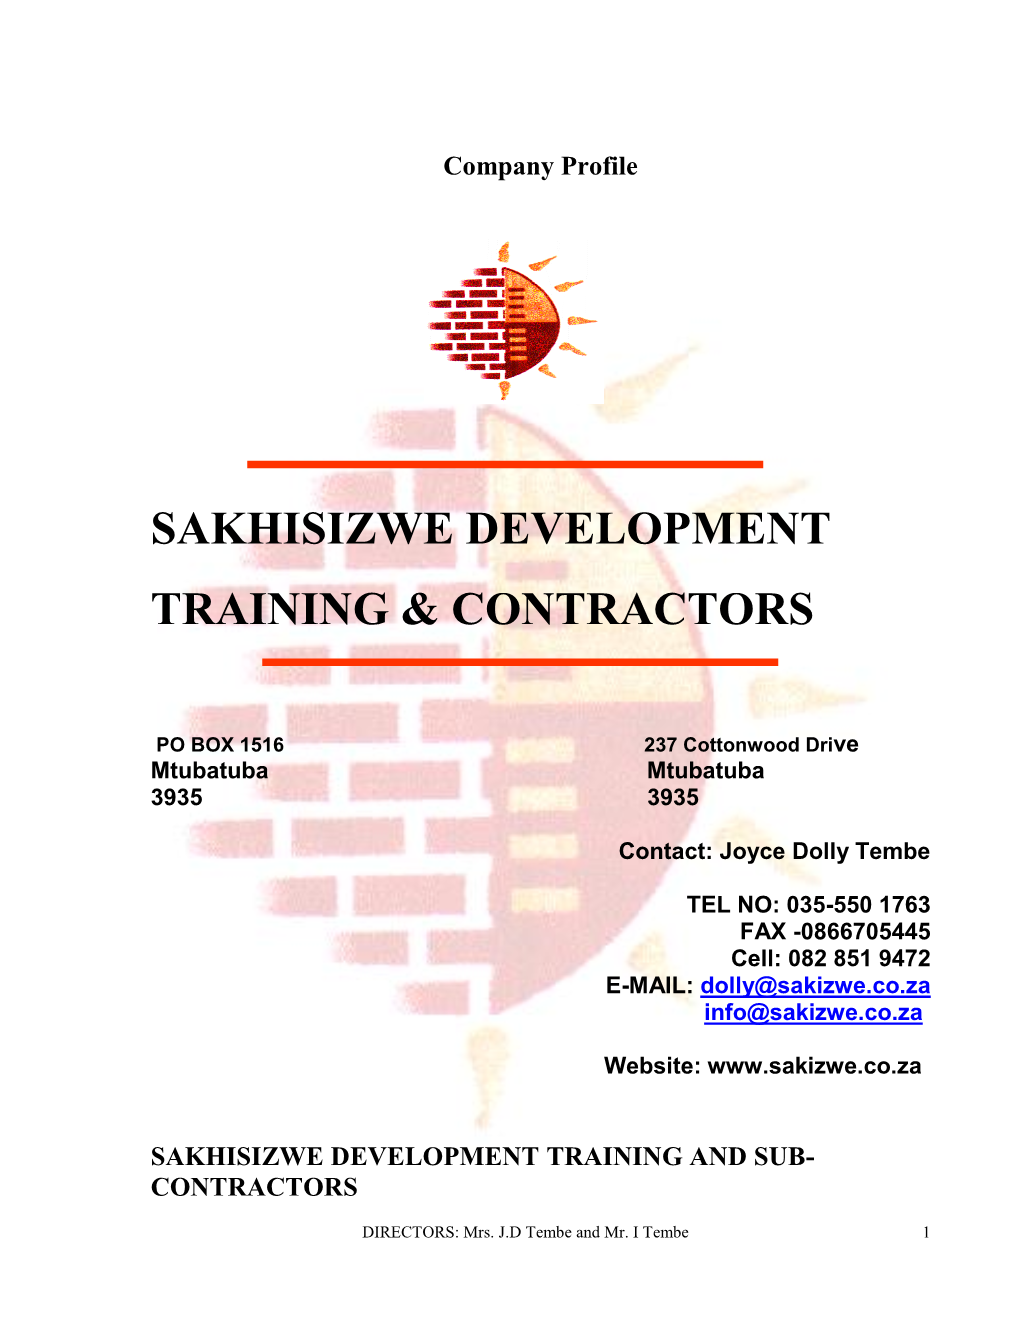 Sakhisizwe Development Training & Contractors